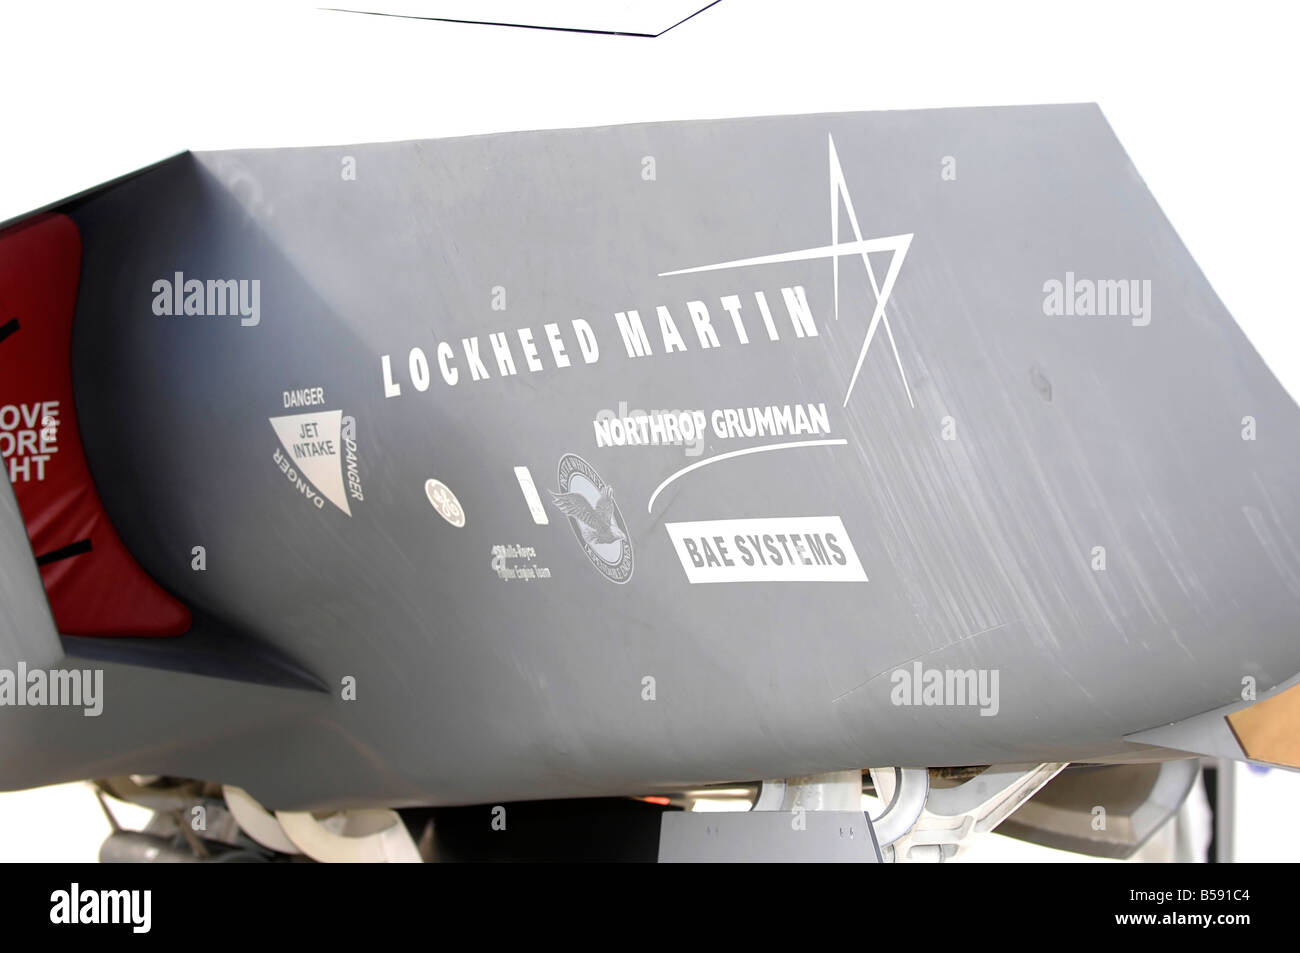 F35 Joint Strike Fighter Lockheed Marti Stock Photo